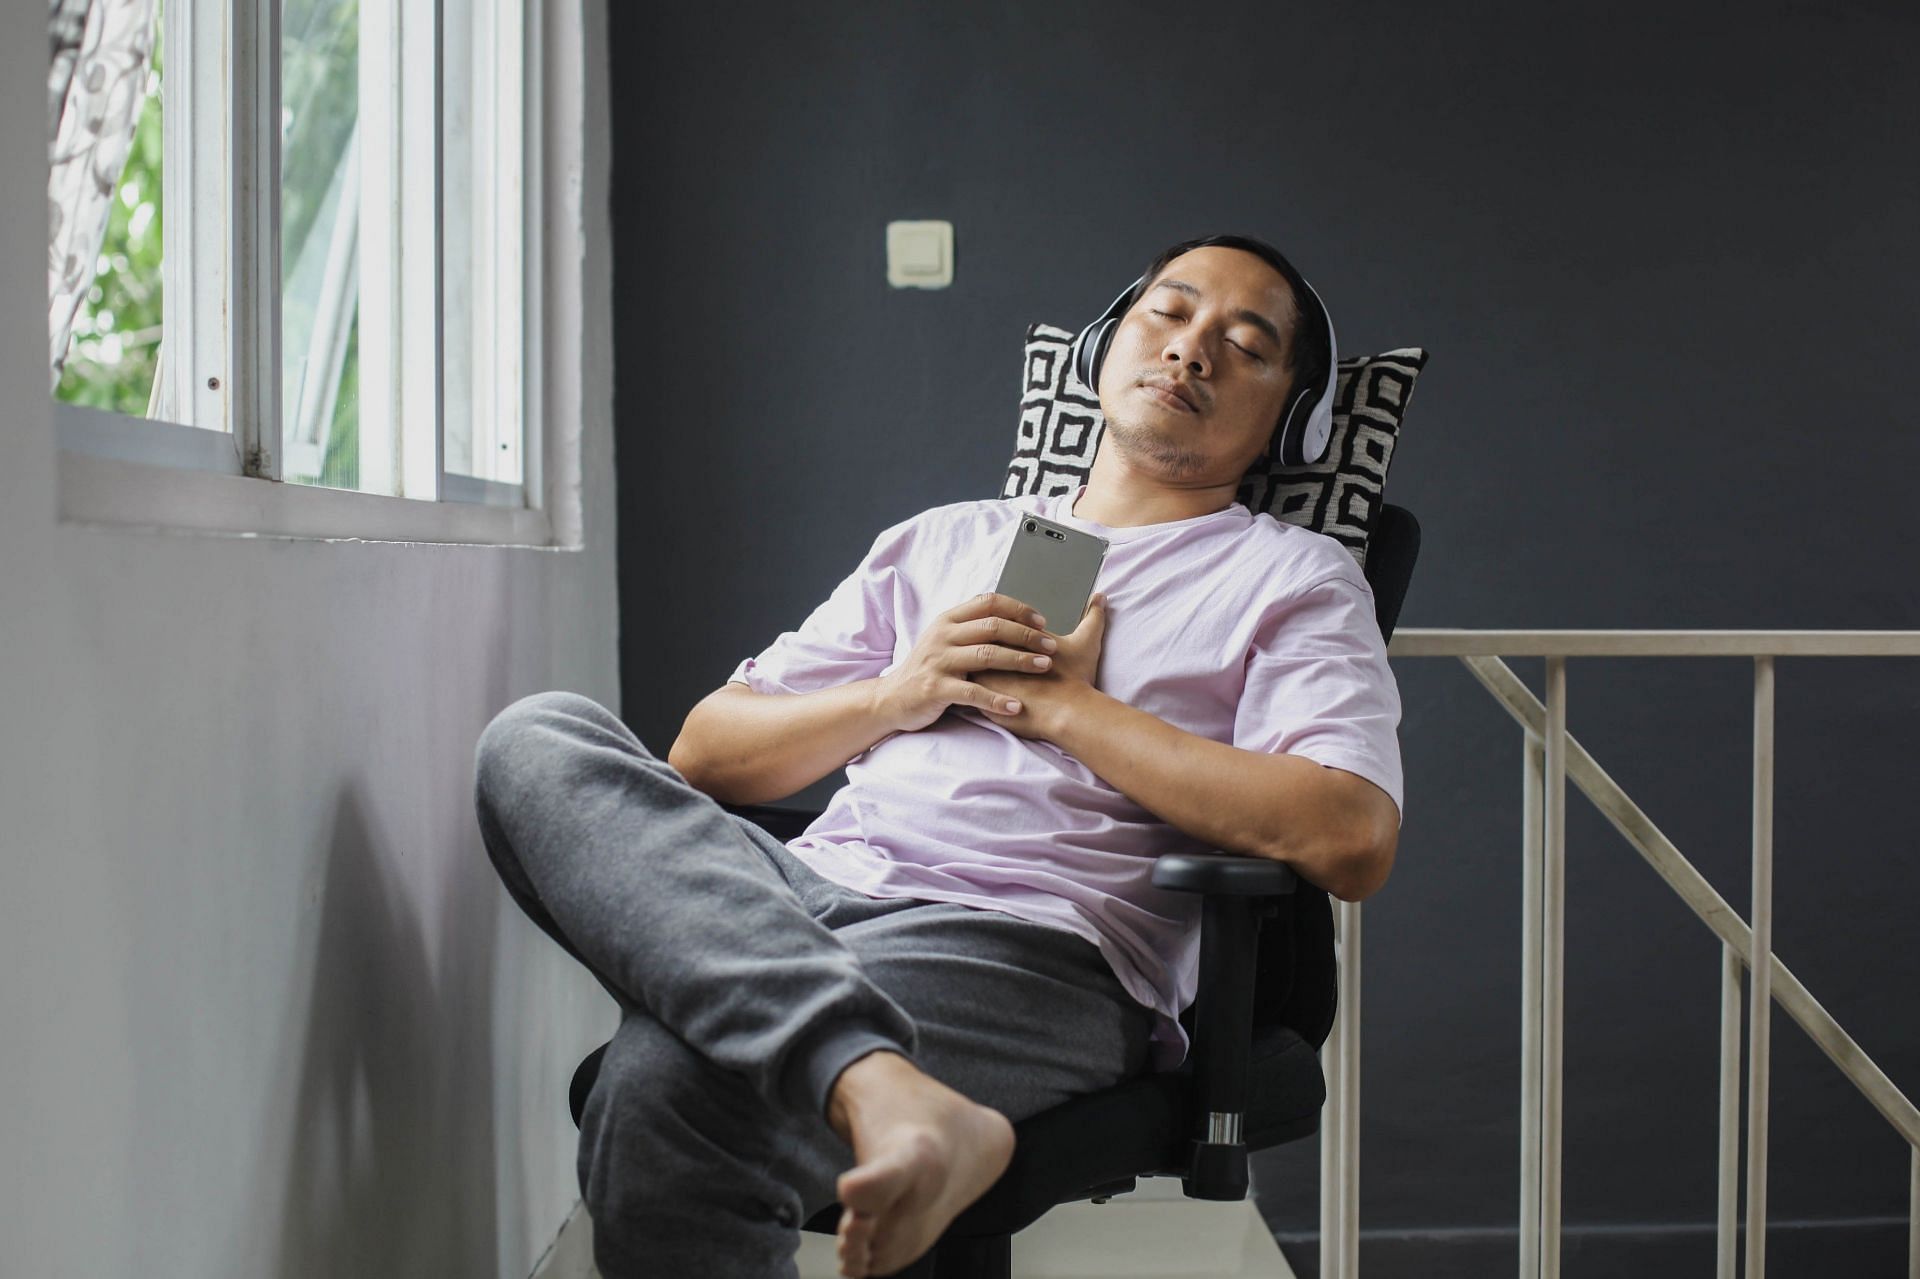 Sitting idle can help you de-stress. (Image via Vecteezy/ Gatot Adriansyah)